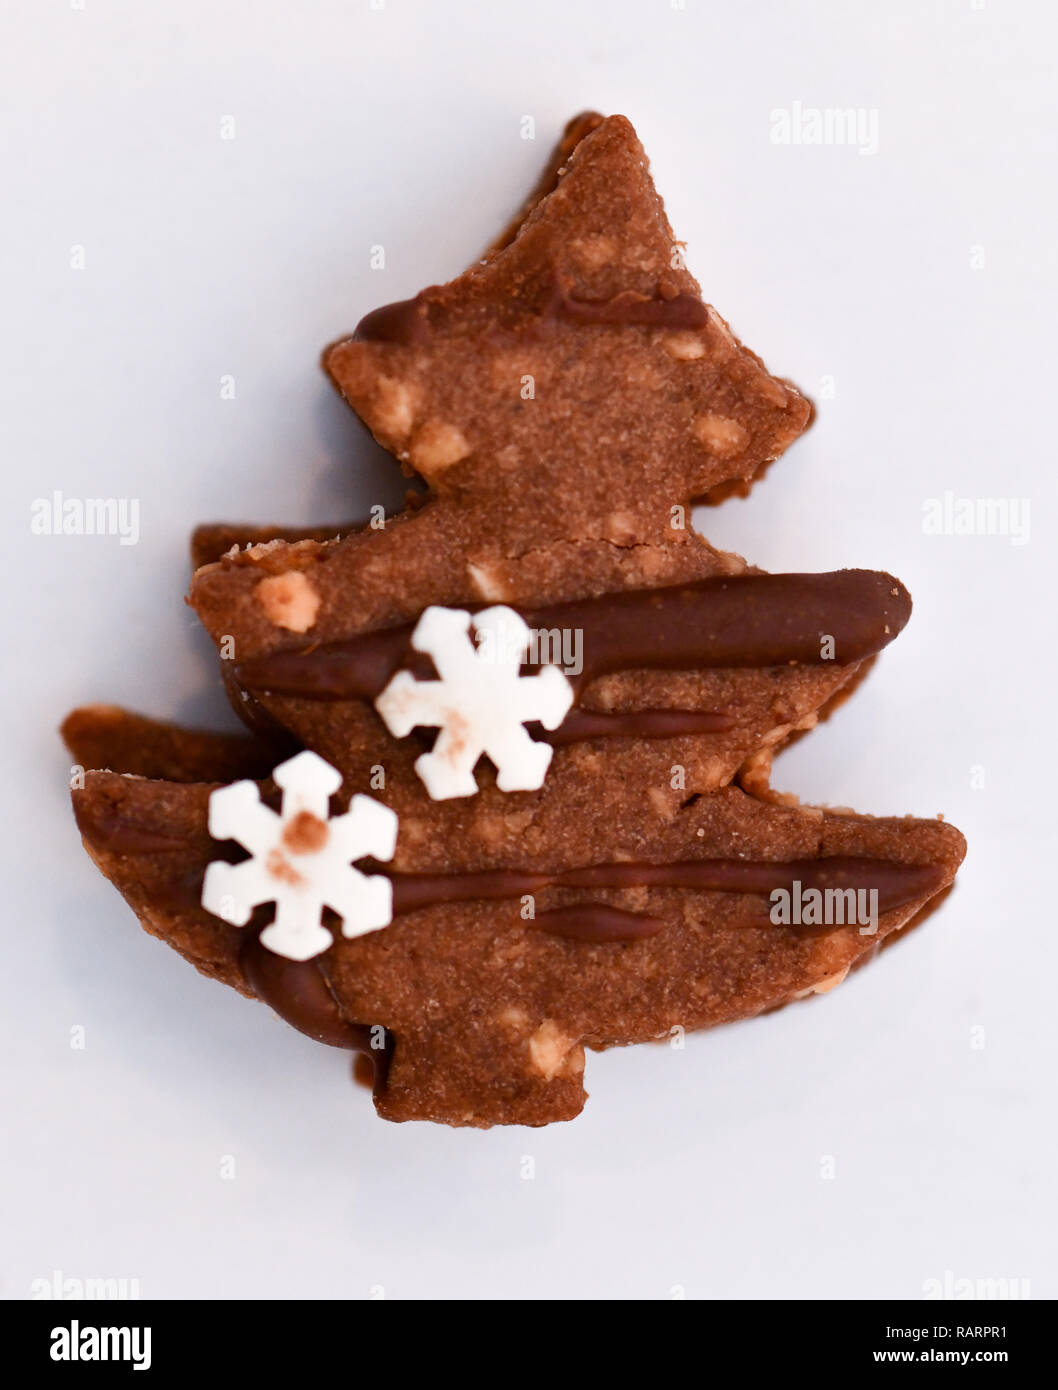 Biscuit Christmas cake, Keks Weihnachtsgebaeck Stock Photo